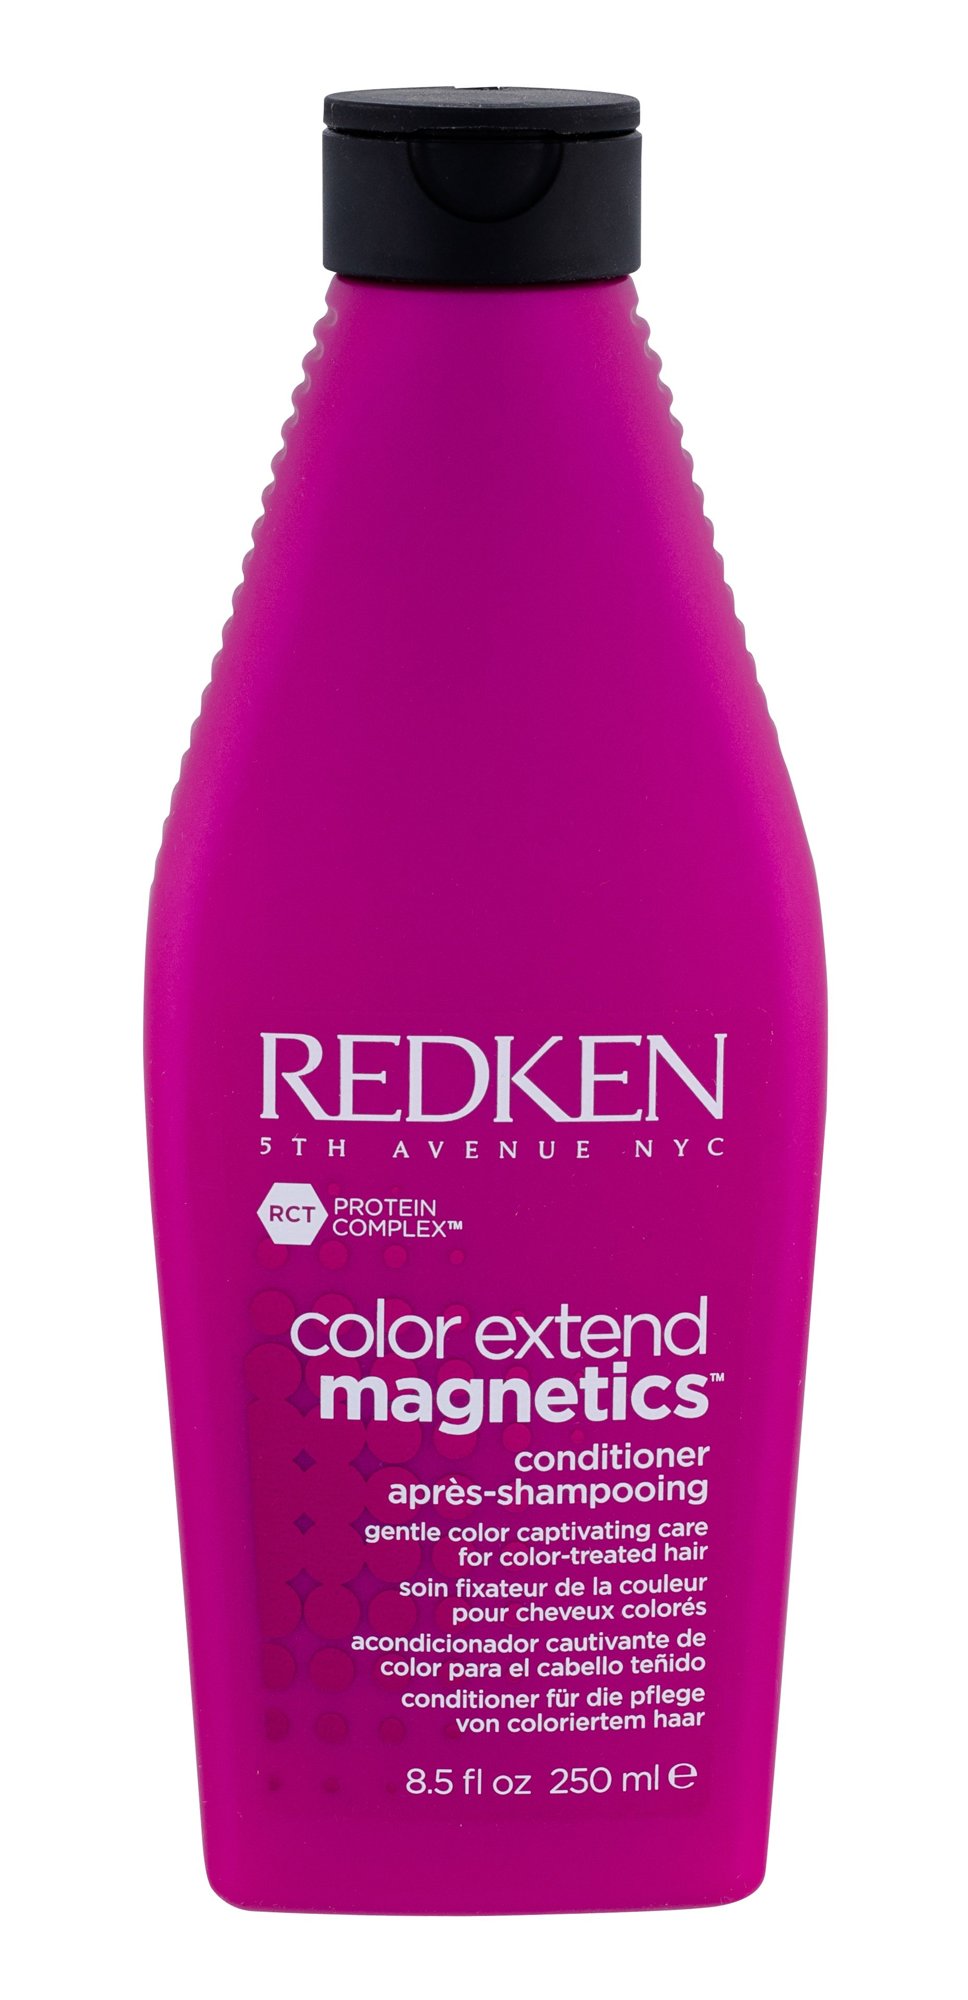 Redken Color Extend Magnetics kondicionierius